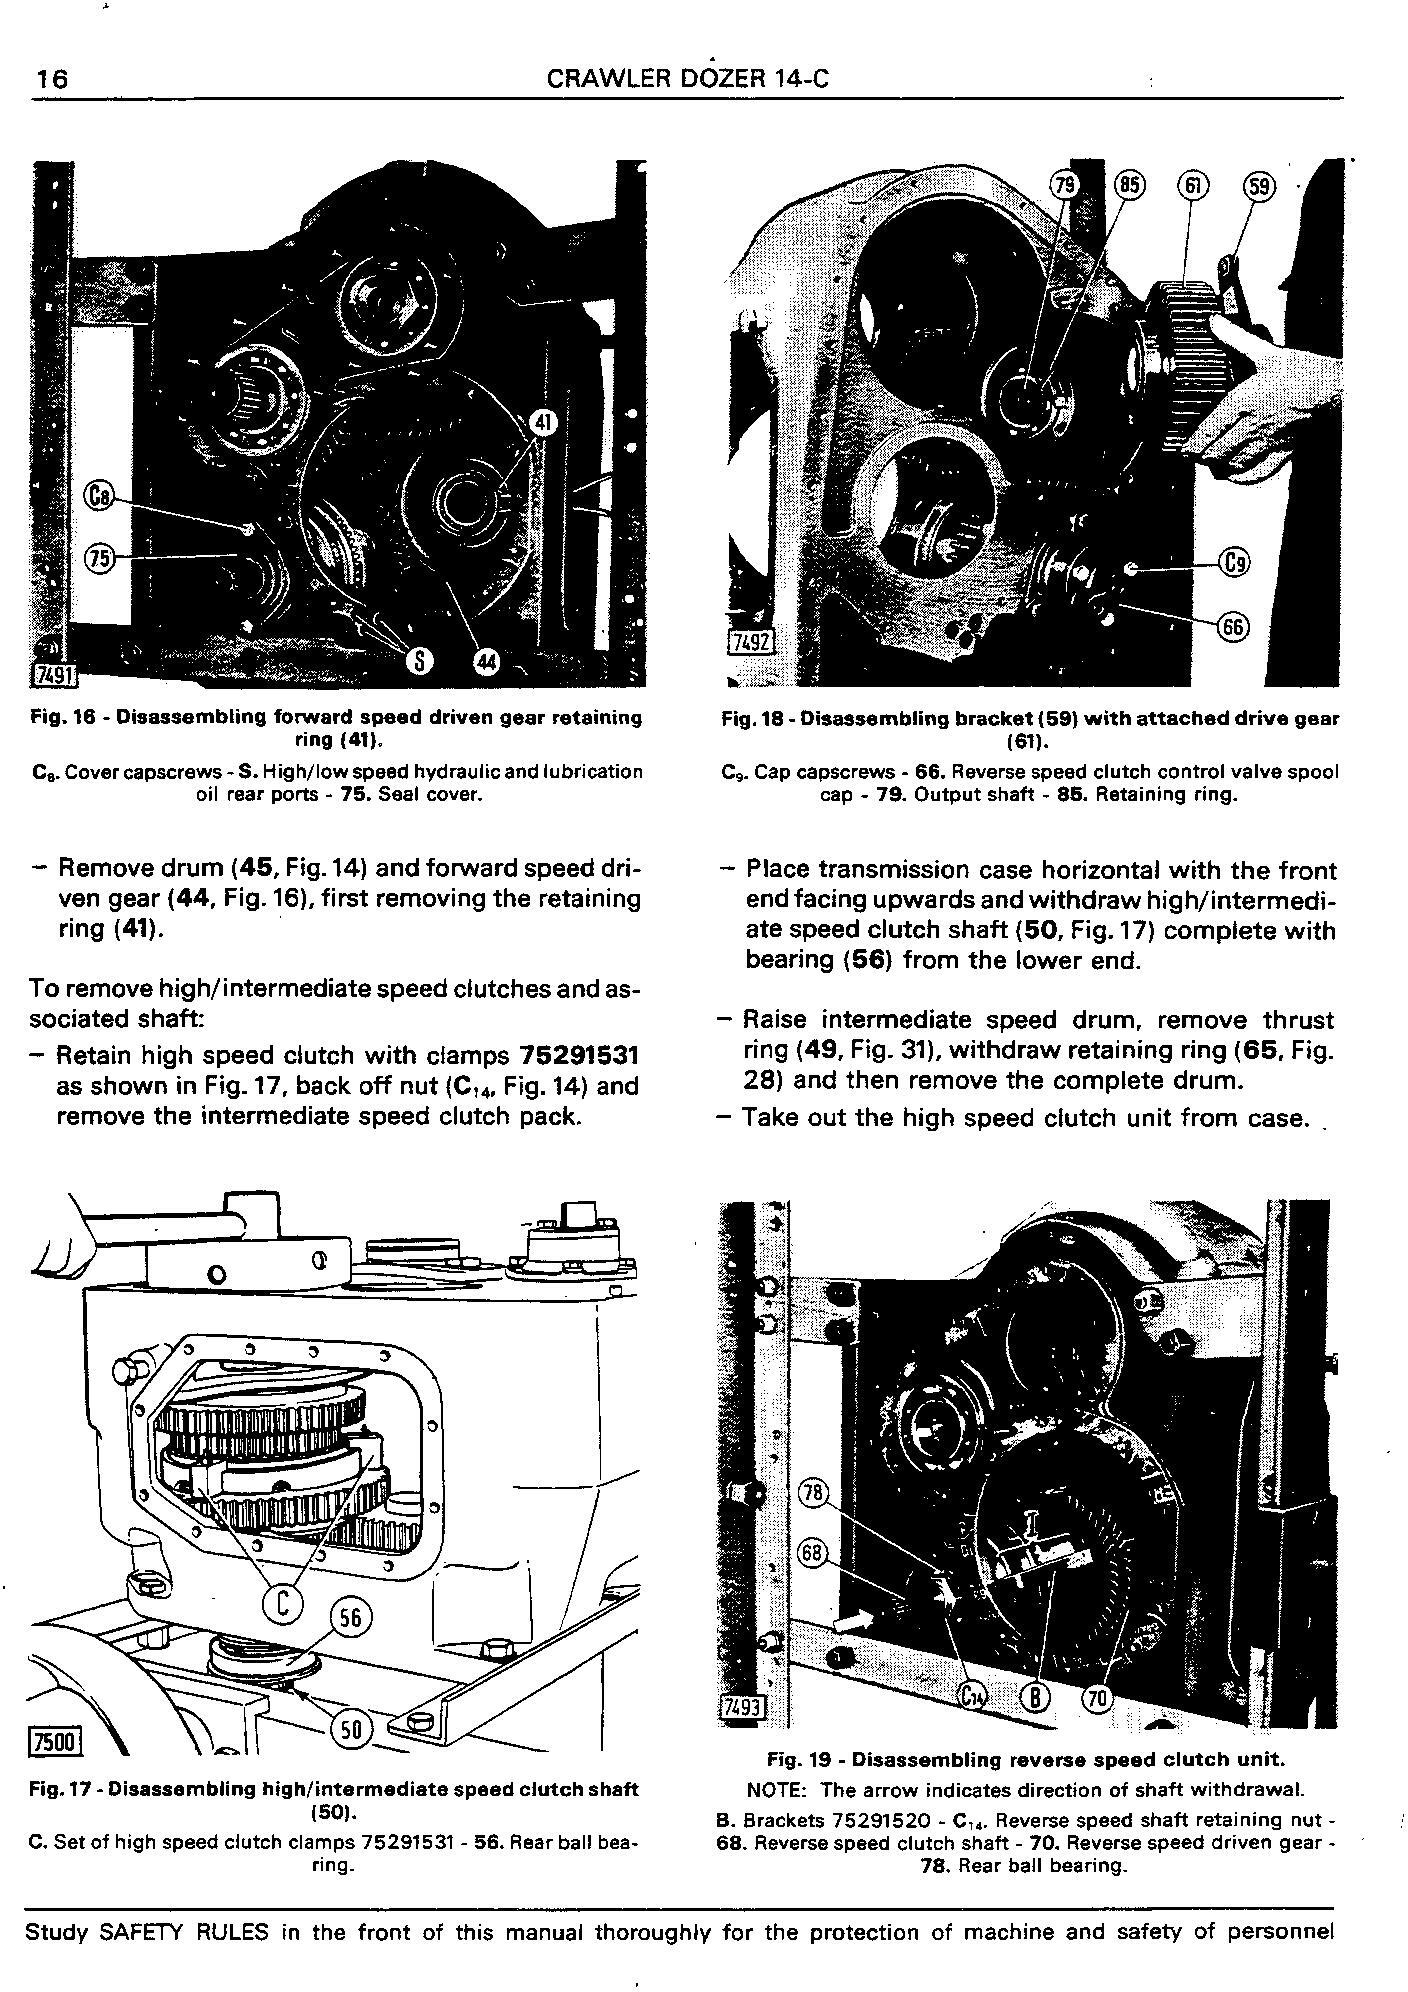 Fiat-Allis14C Crawler Dozer with 8365 Engine Service Manual - 2